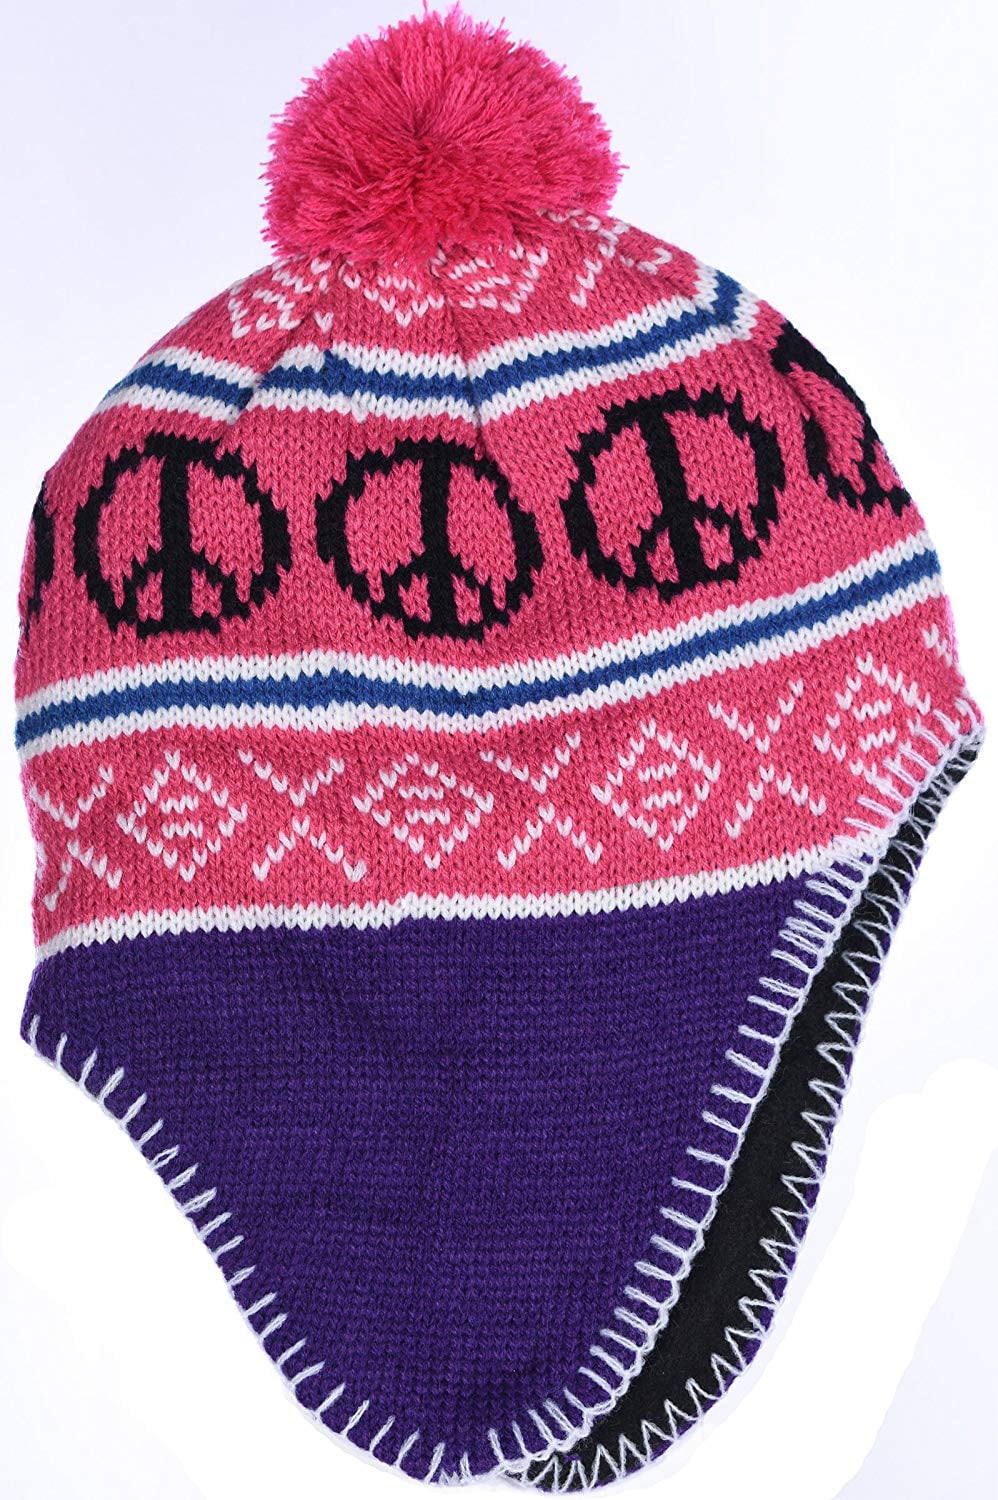 SWAK Girls Micro-Fleece Lined Knit Hat Ear Flaps Pom Top in 3 Colors 